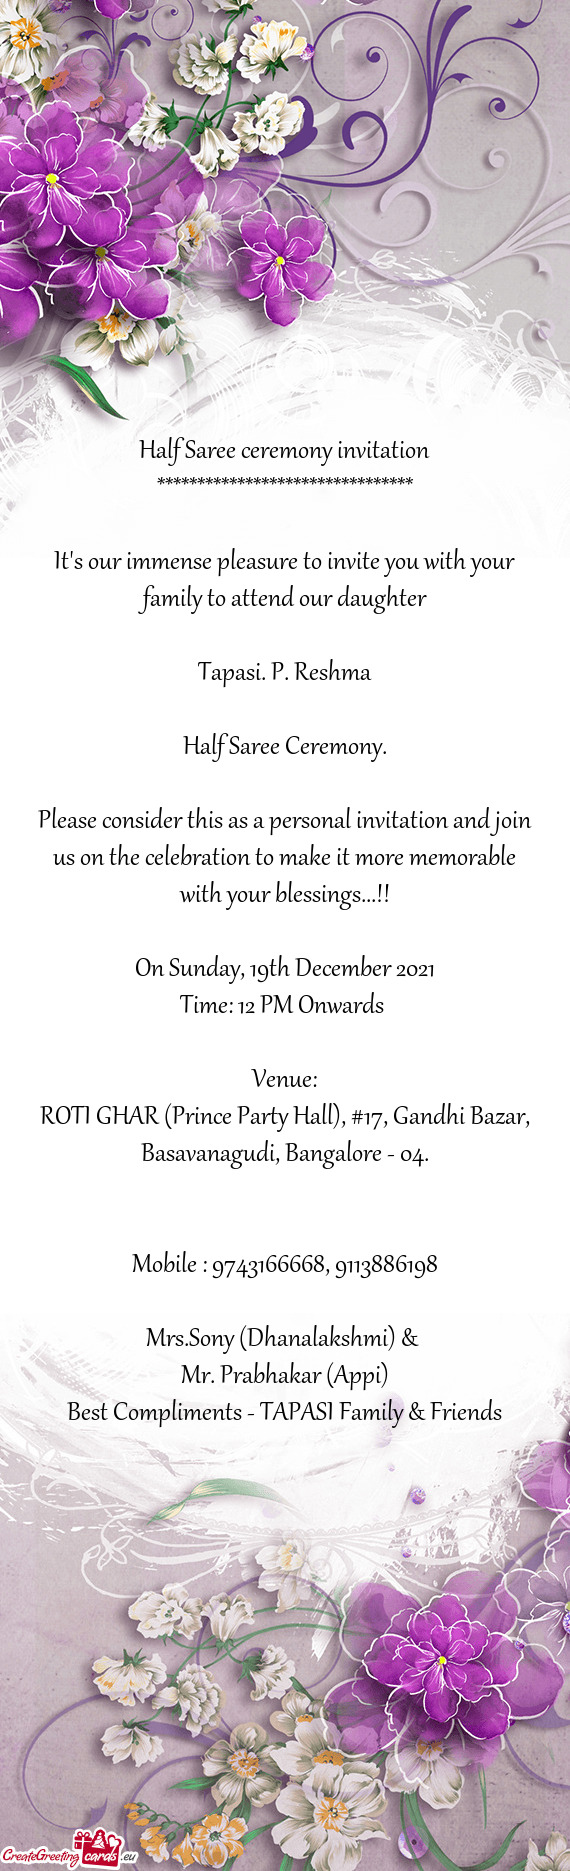 ROTI GHAR (Prince Party Hall), #17, Gandhi Bazar, Basavanagudi, Bangalore - 04